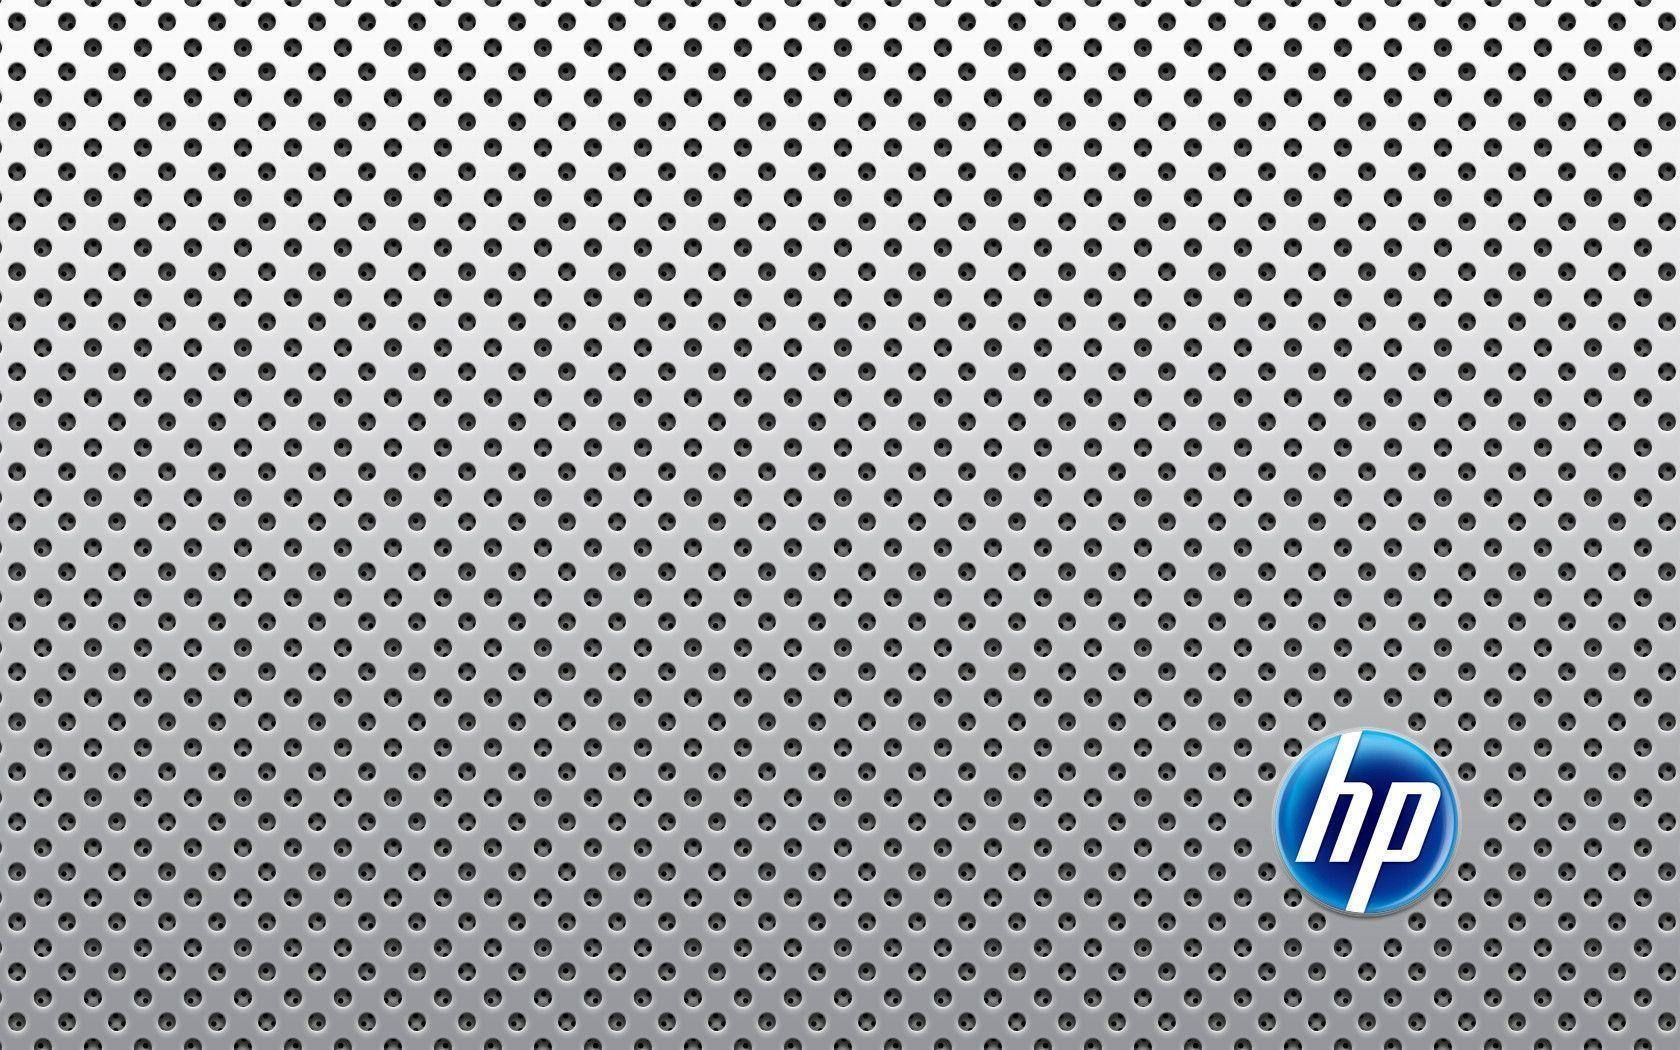 HP Laptop Wallpapers - Wallpaper Cave